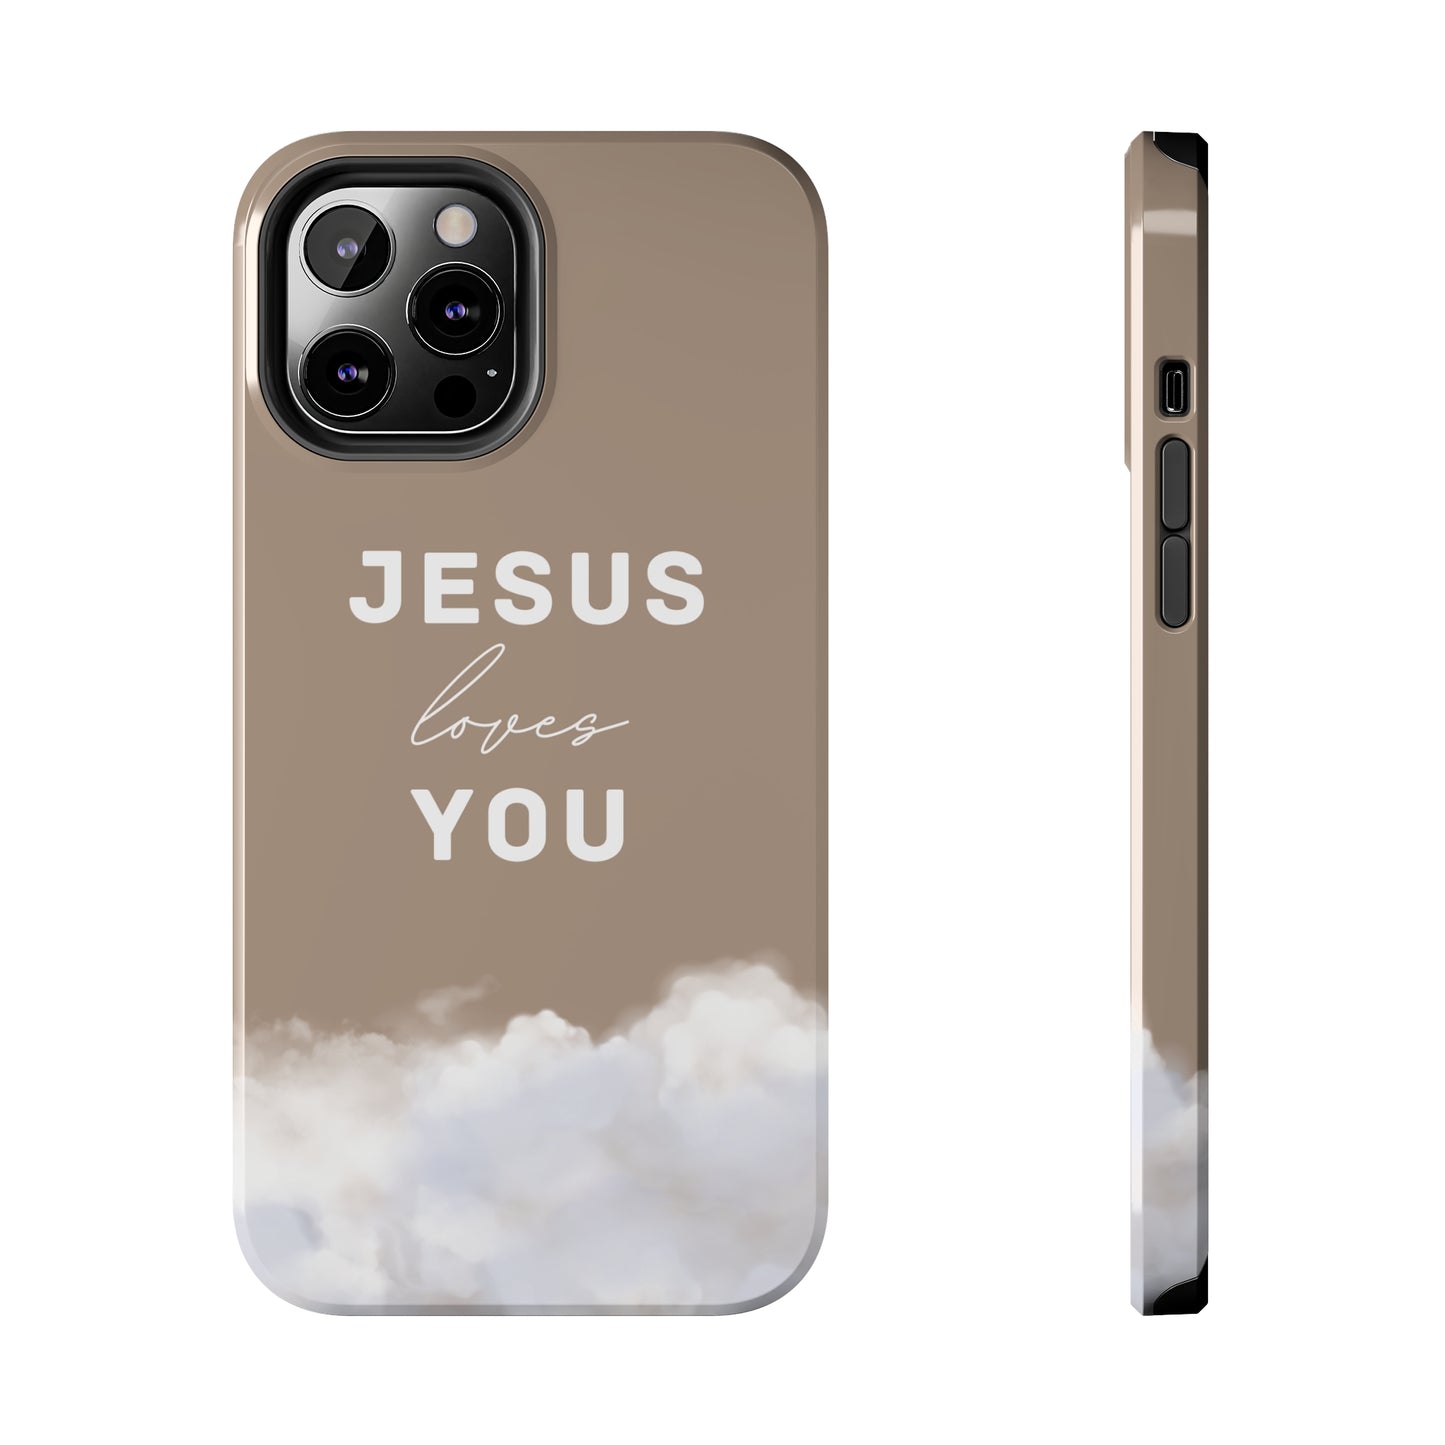 Jesus Love's You iPhone Cases